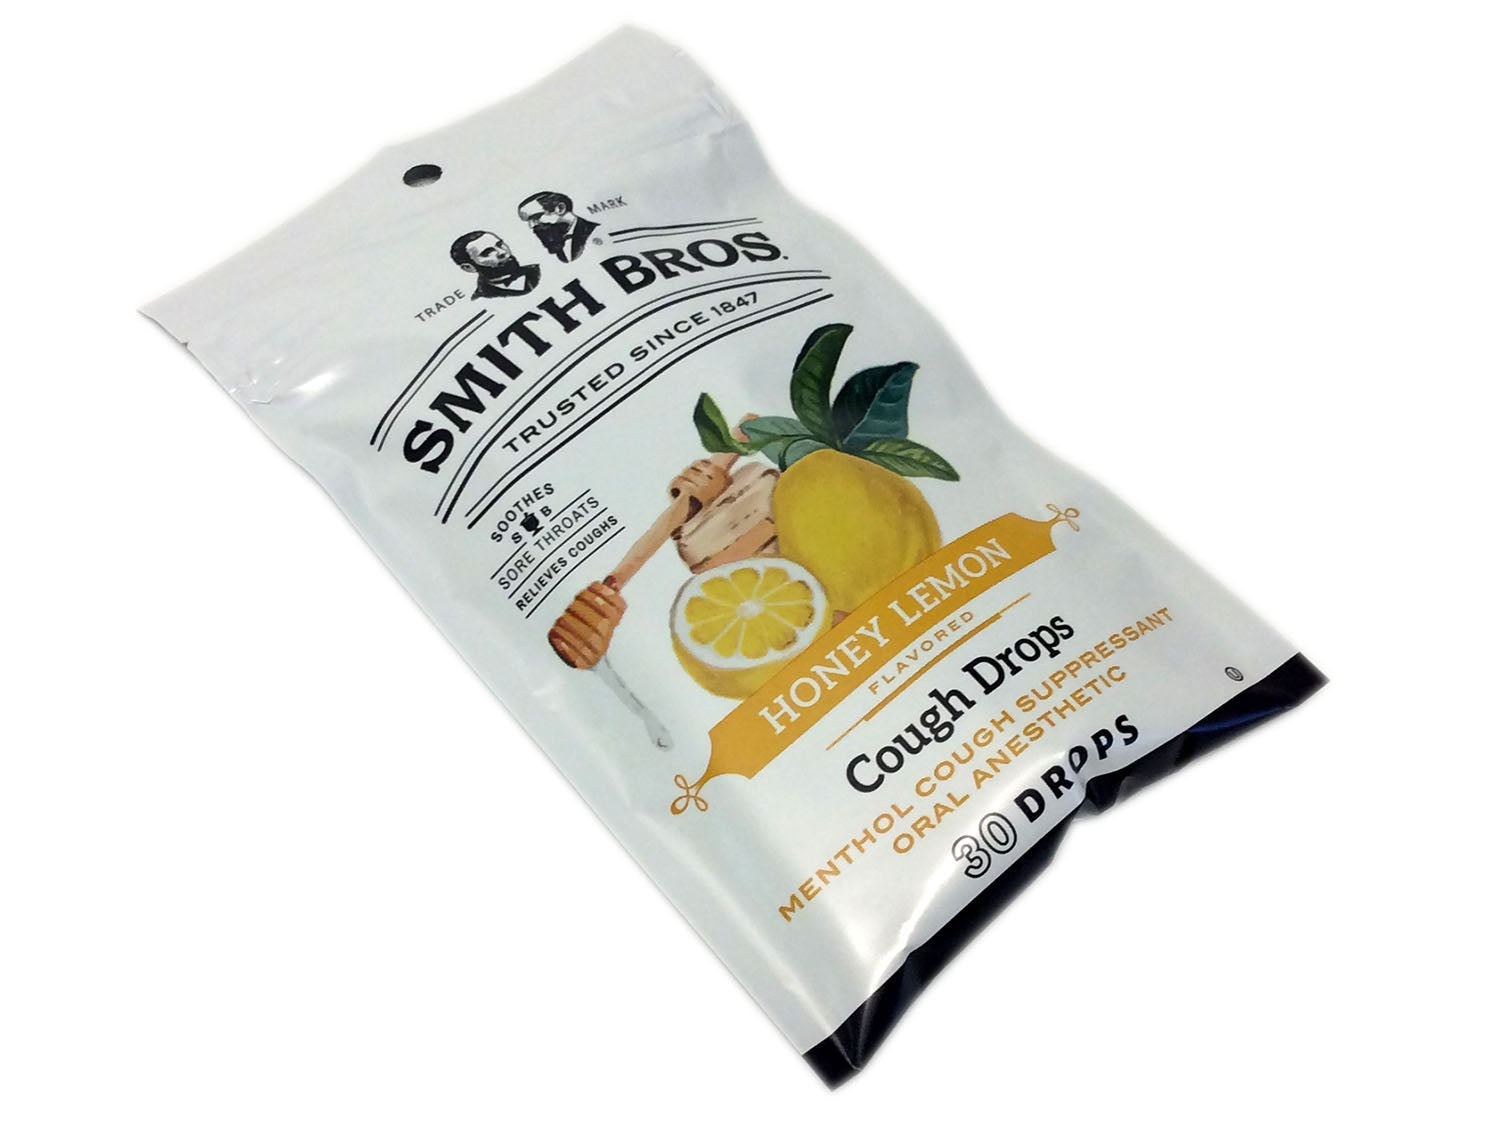 Smith Brothers Cough Drops - Honey Lemon - 30 drop bag